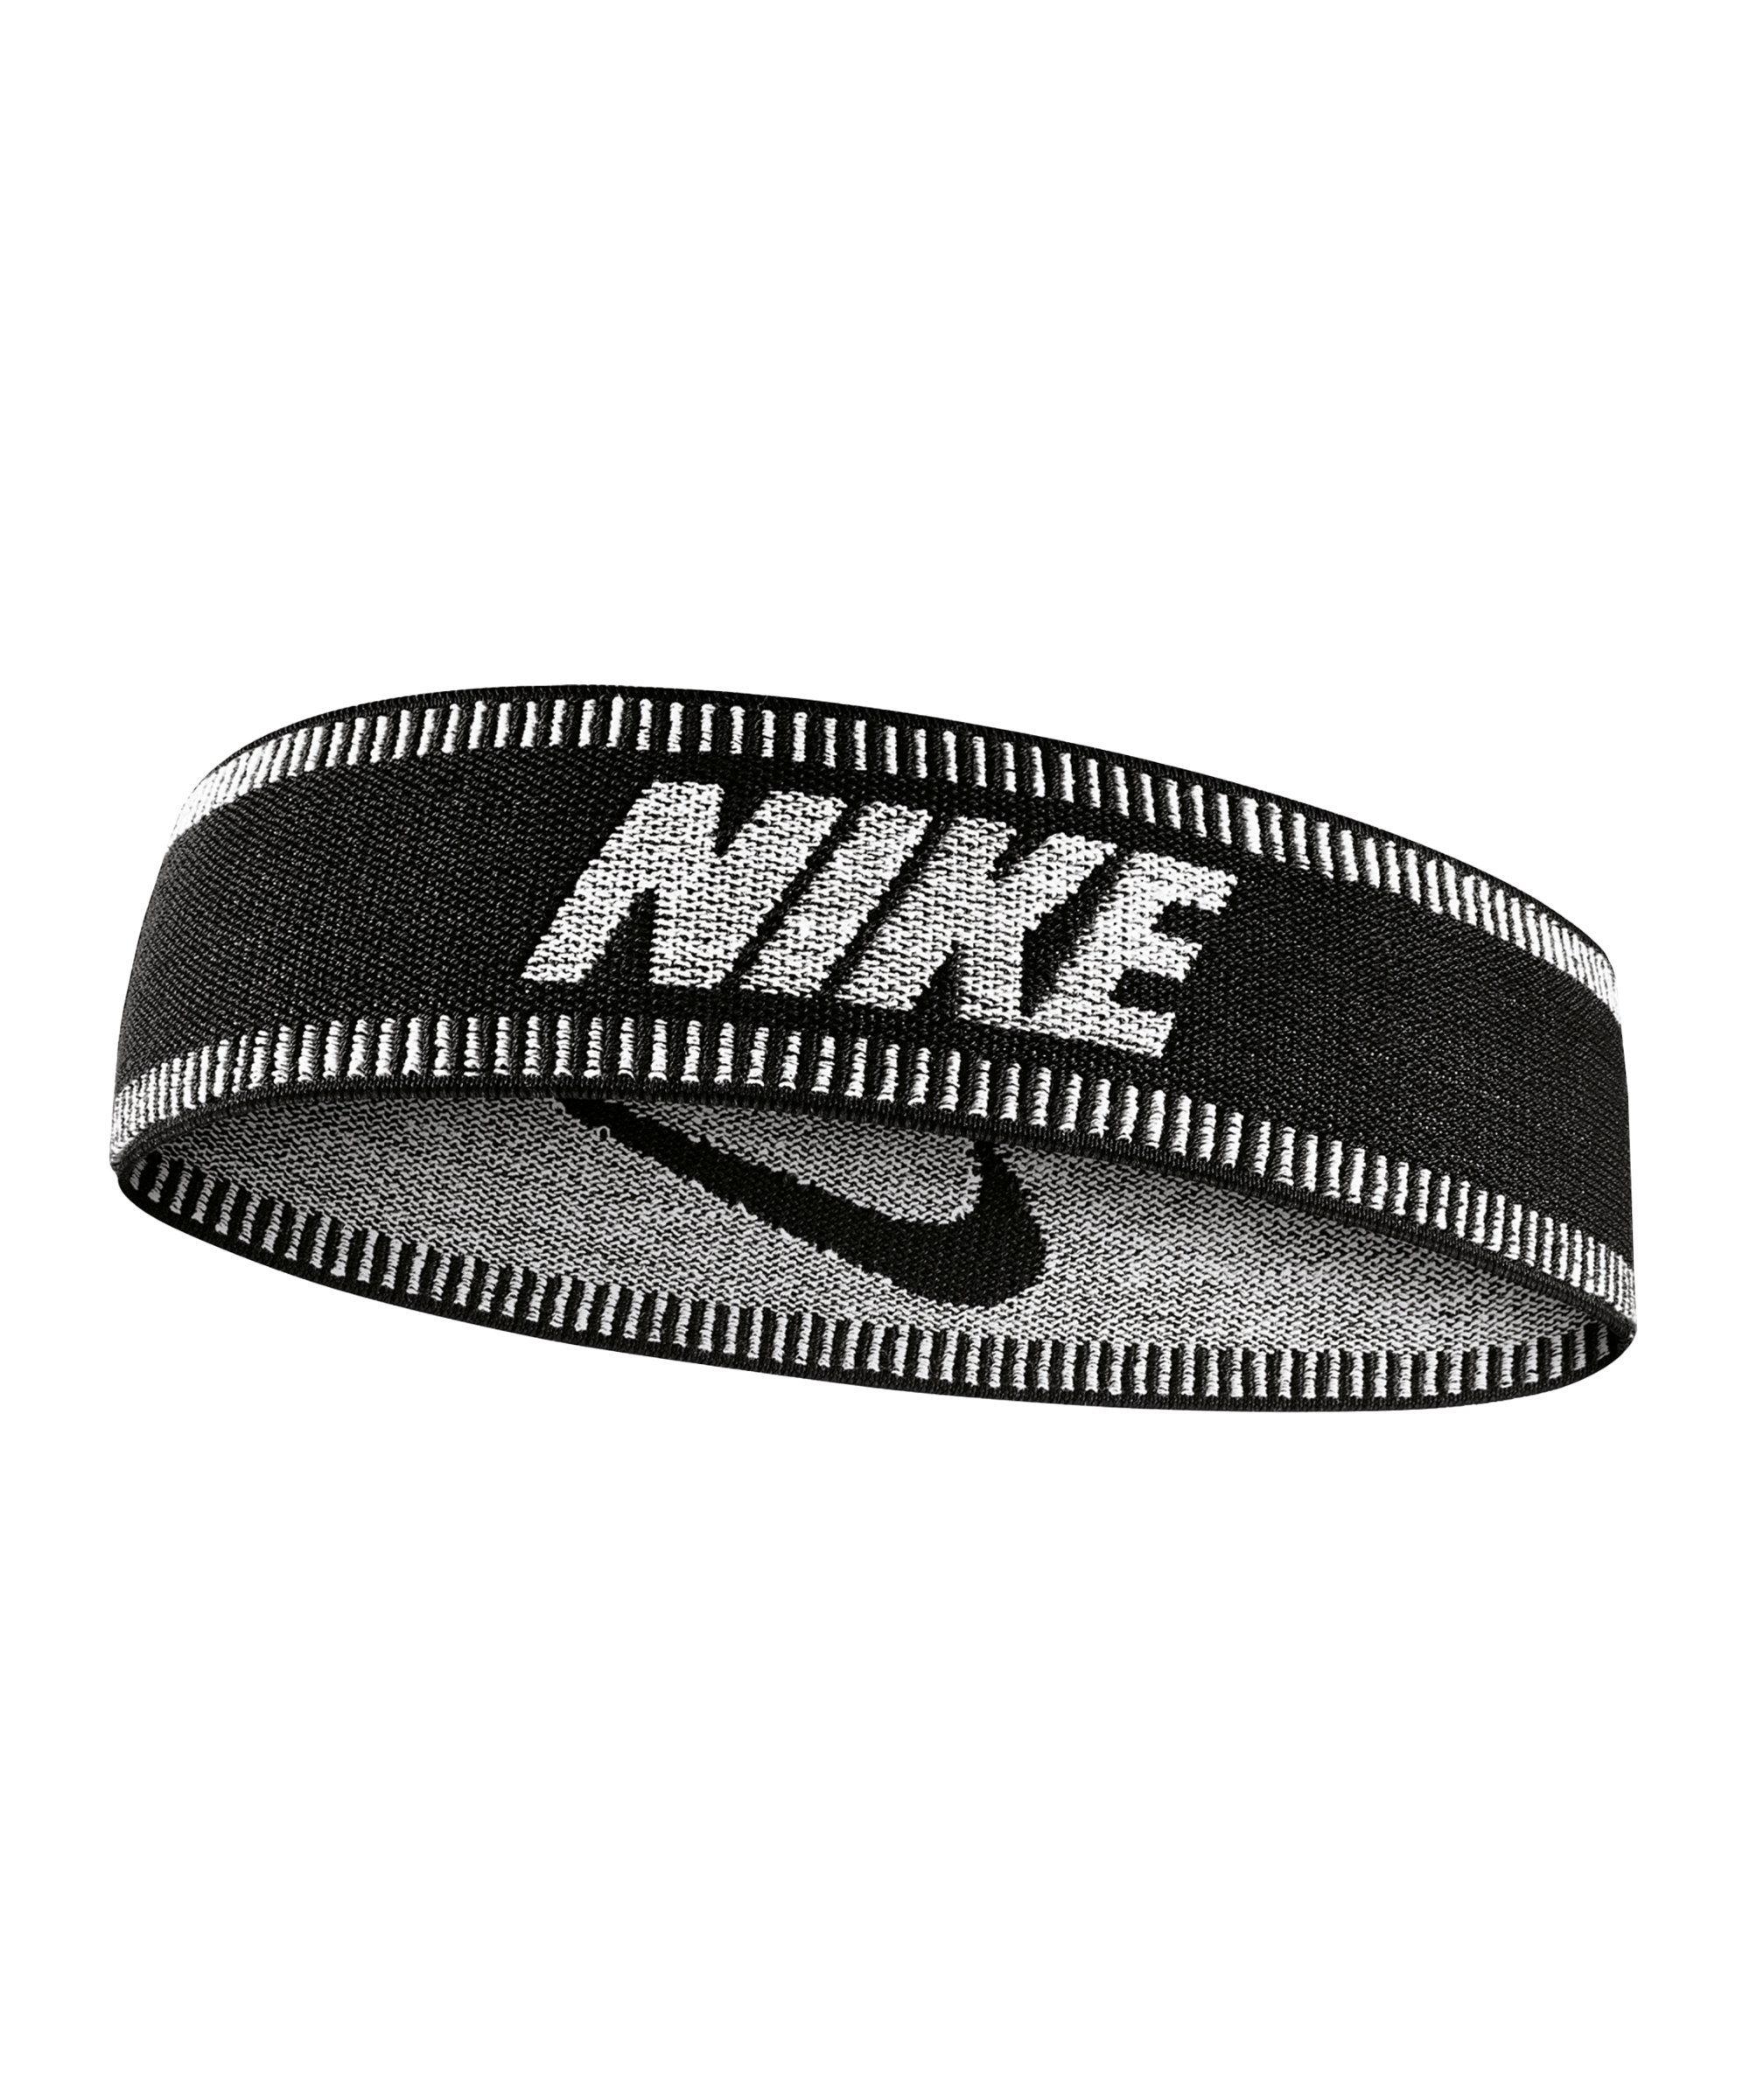 Nike Sport Haarband Schwarz Weiss F010 - schwarz